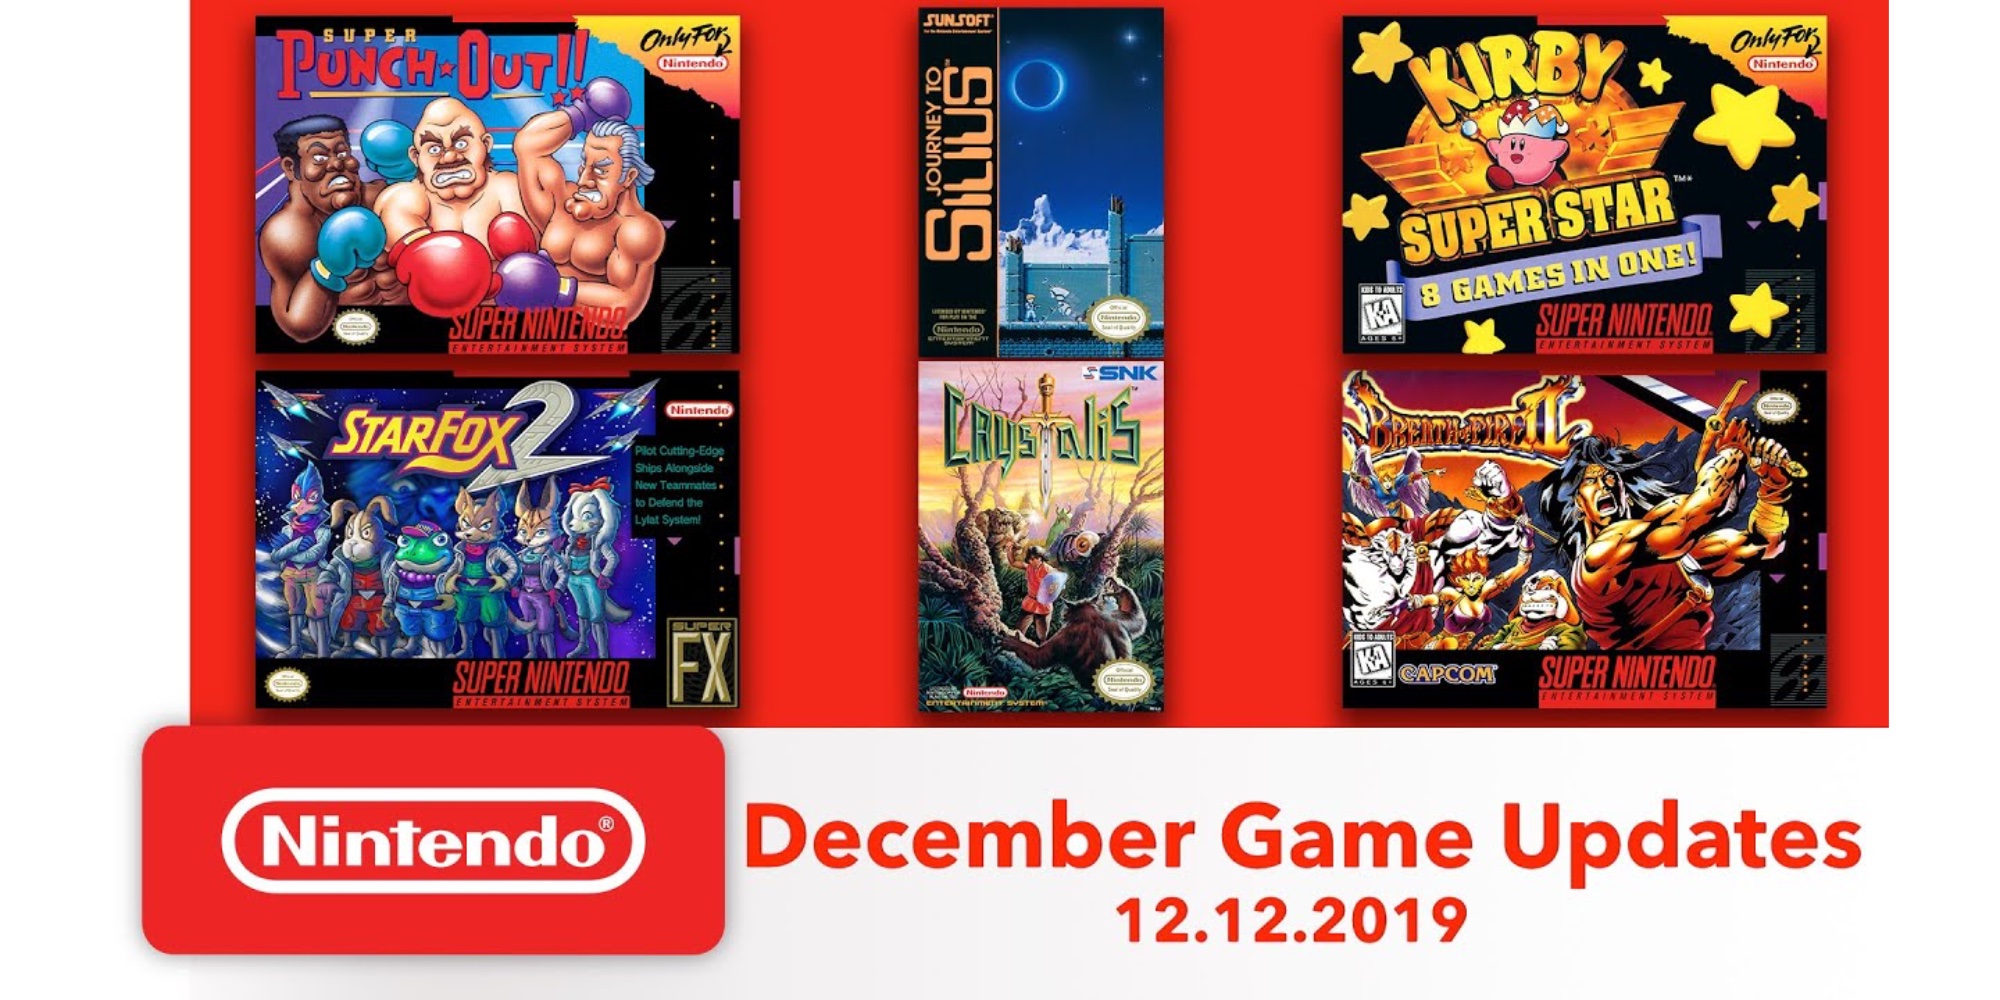 Smigre medaljevinder mount Nintendo Switch Online December update has six retro games - 9to5Toys